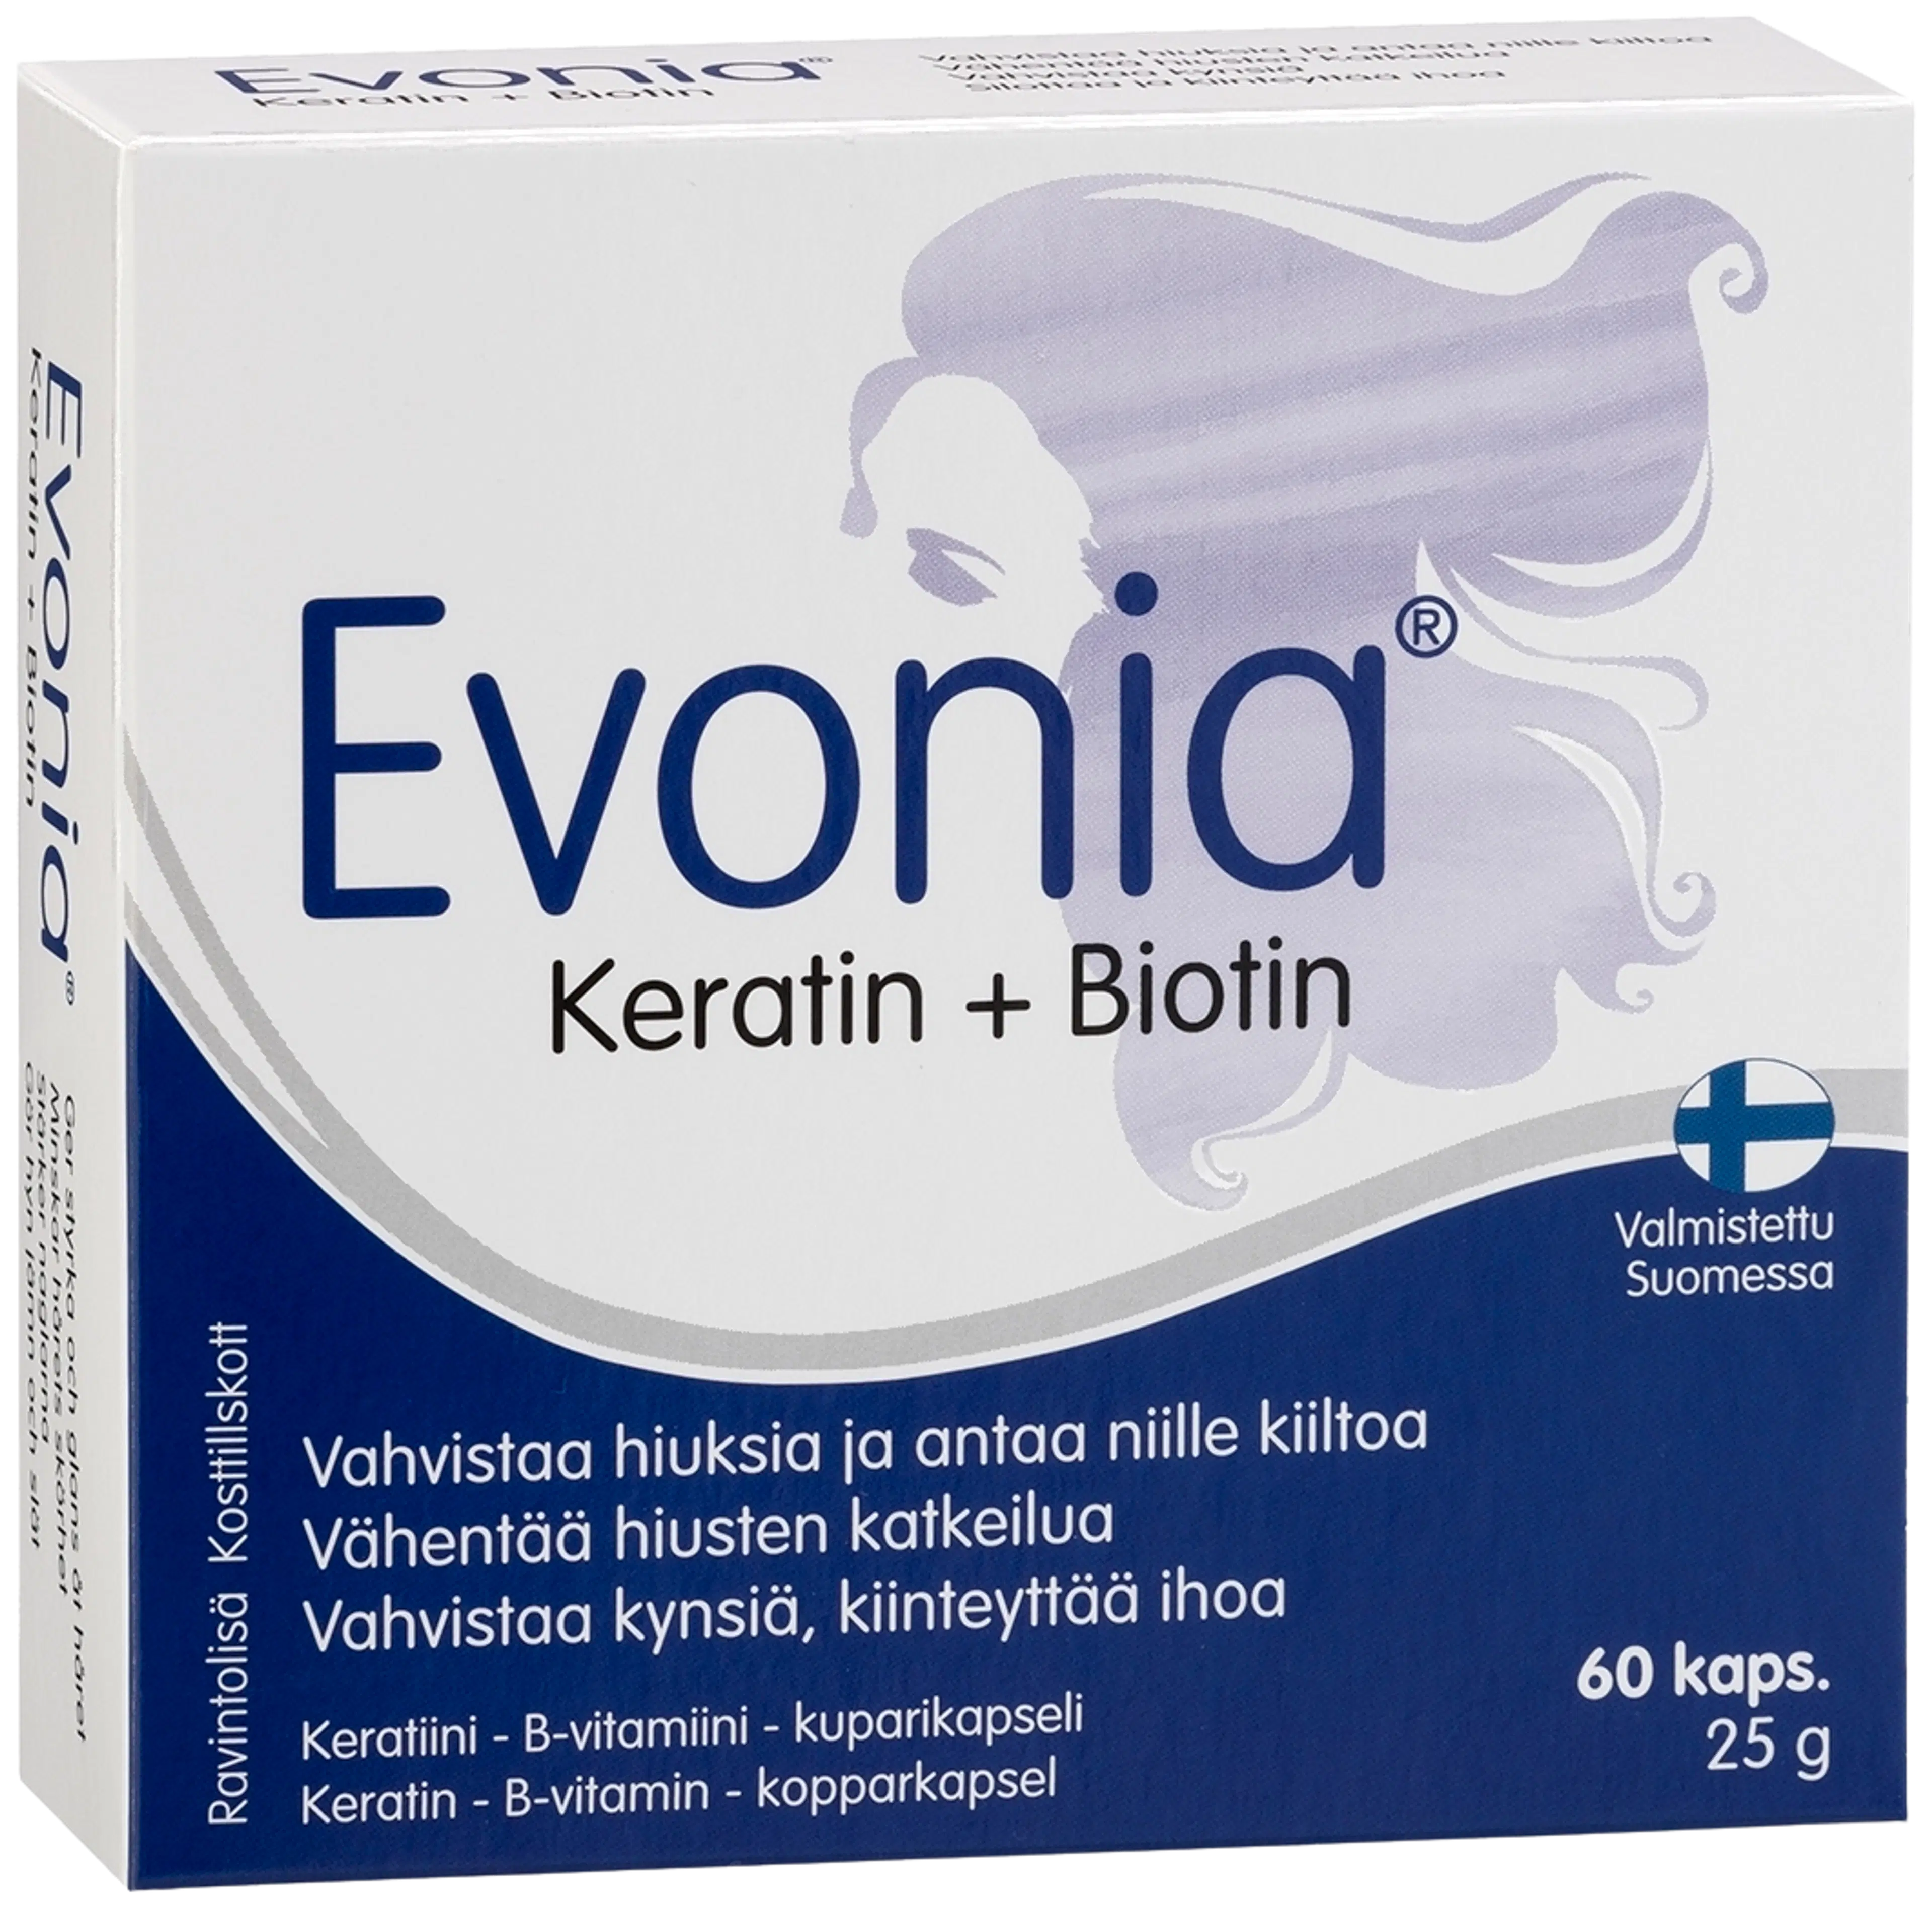 Evonia Keratin + Biotin Keratiini-B-vitamiini-kuparikapseli 60 kaps